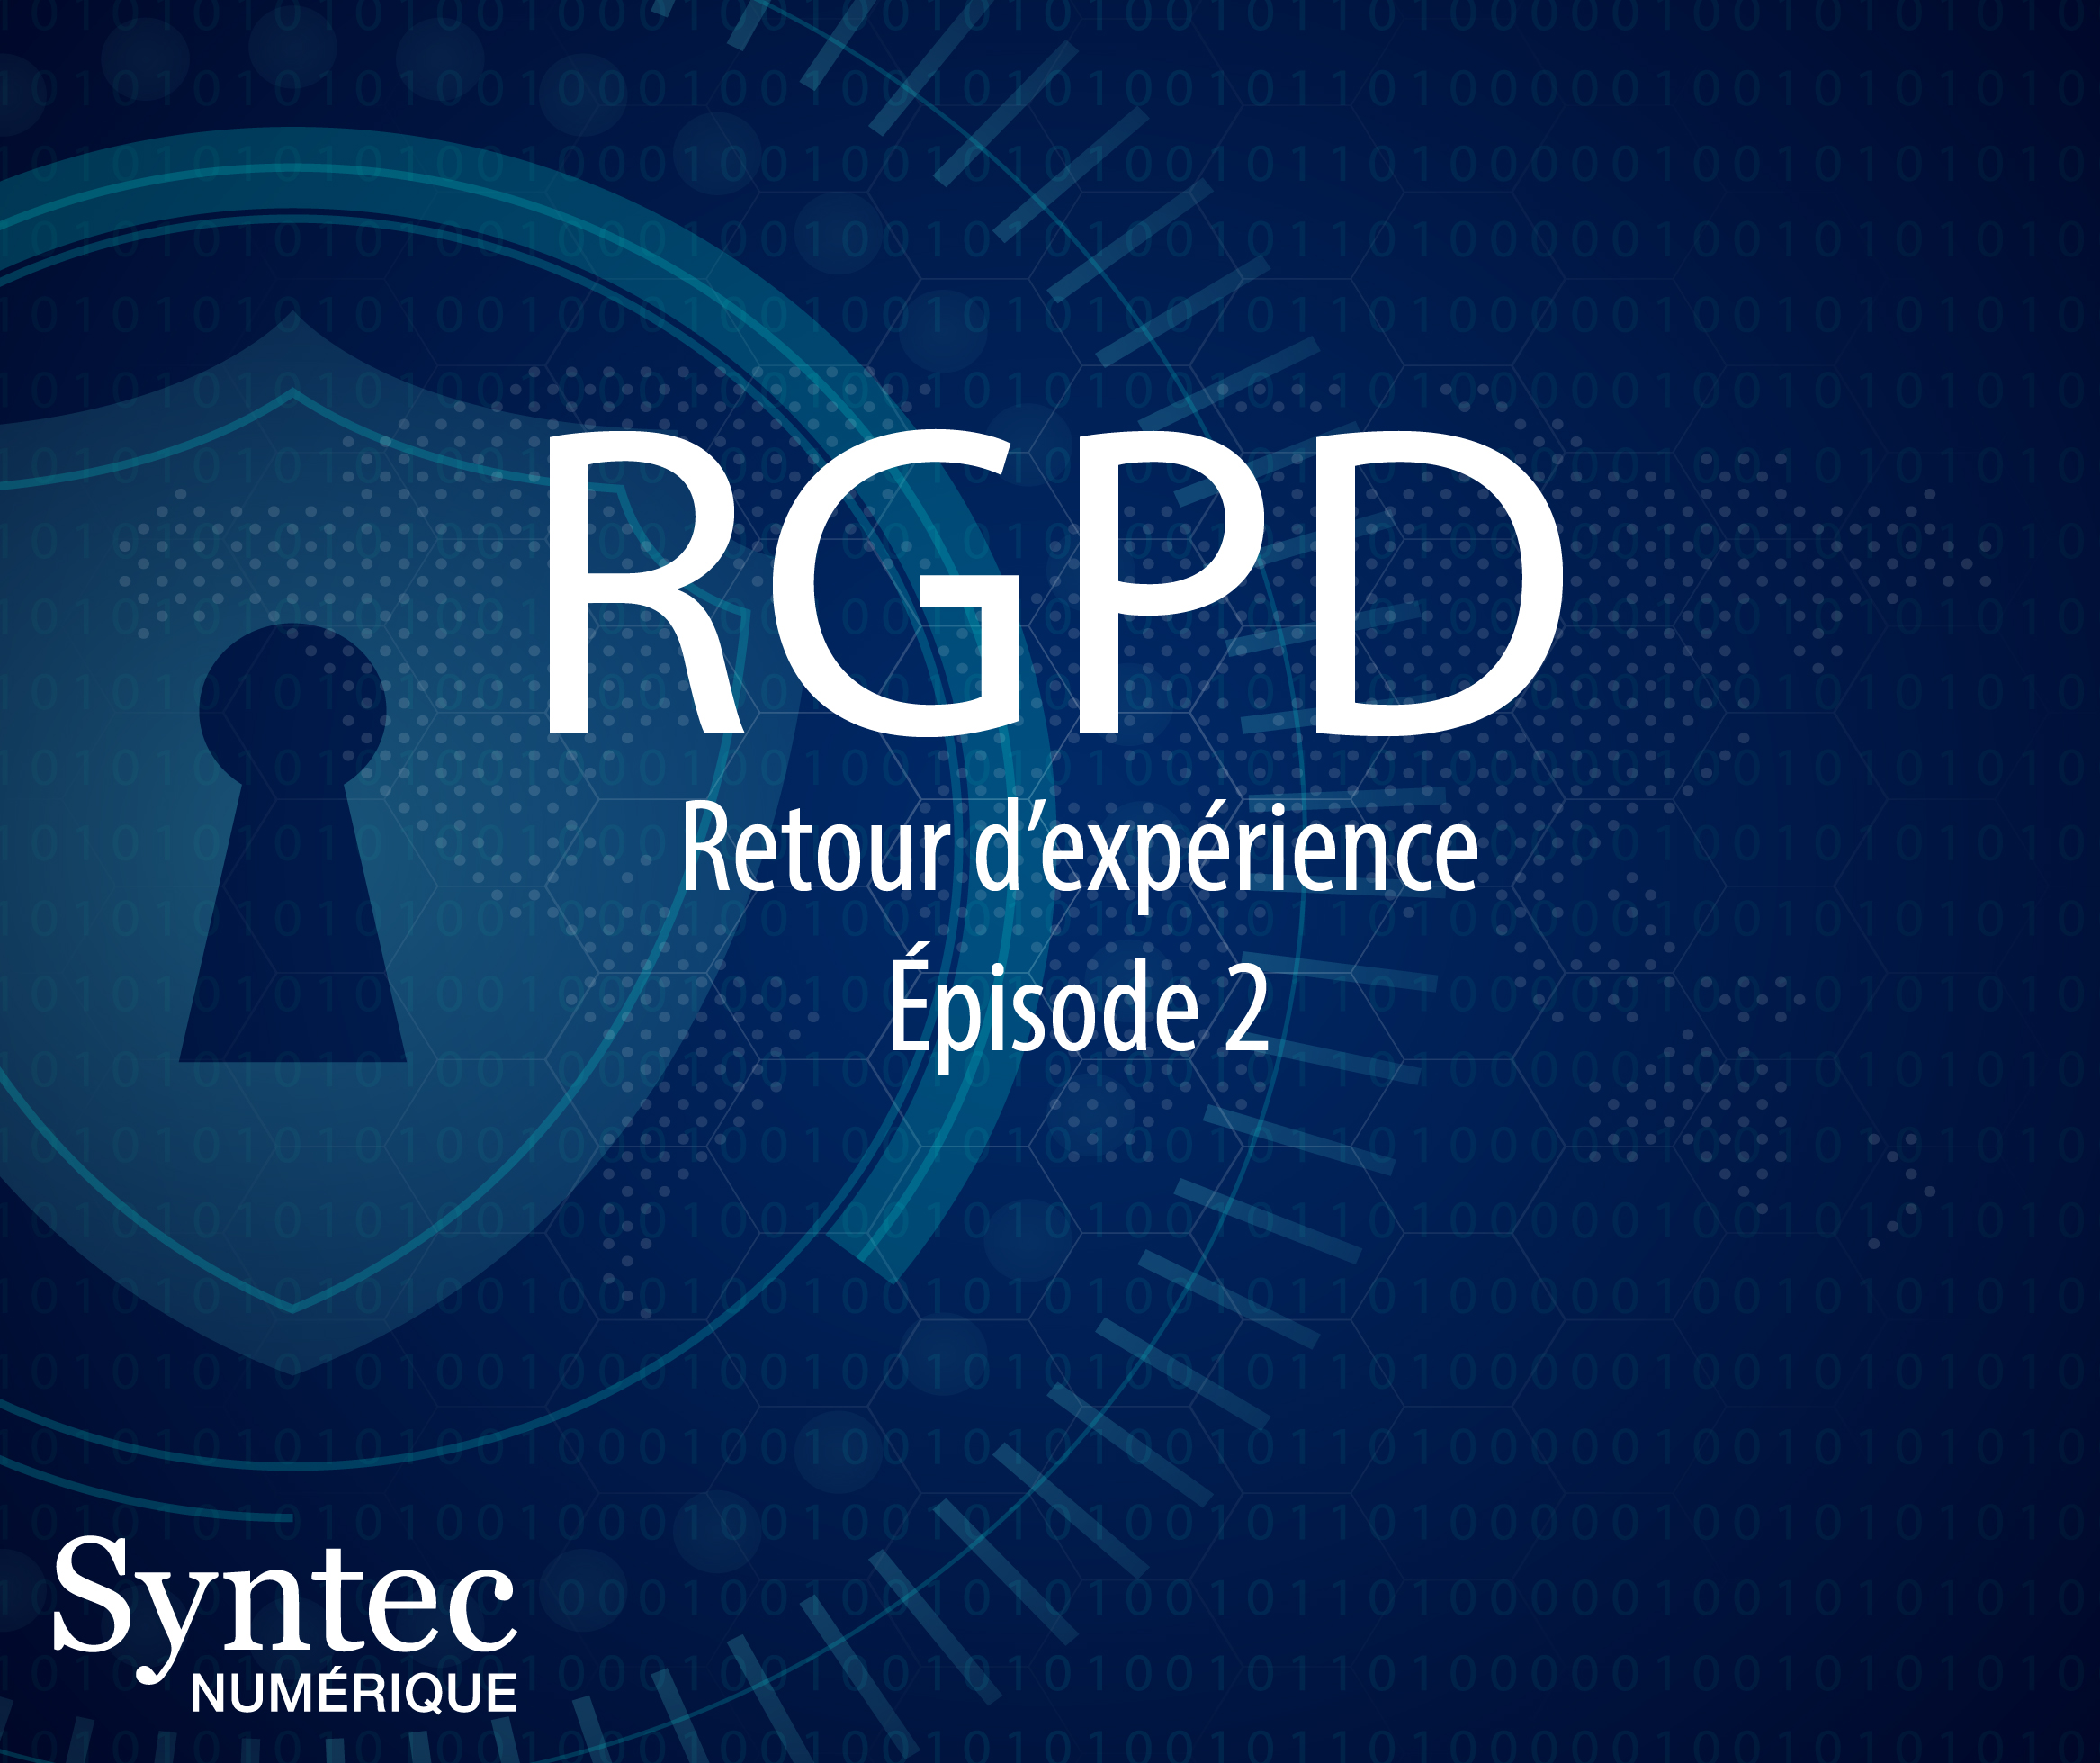 RGPD Episode 2